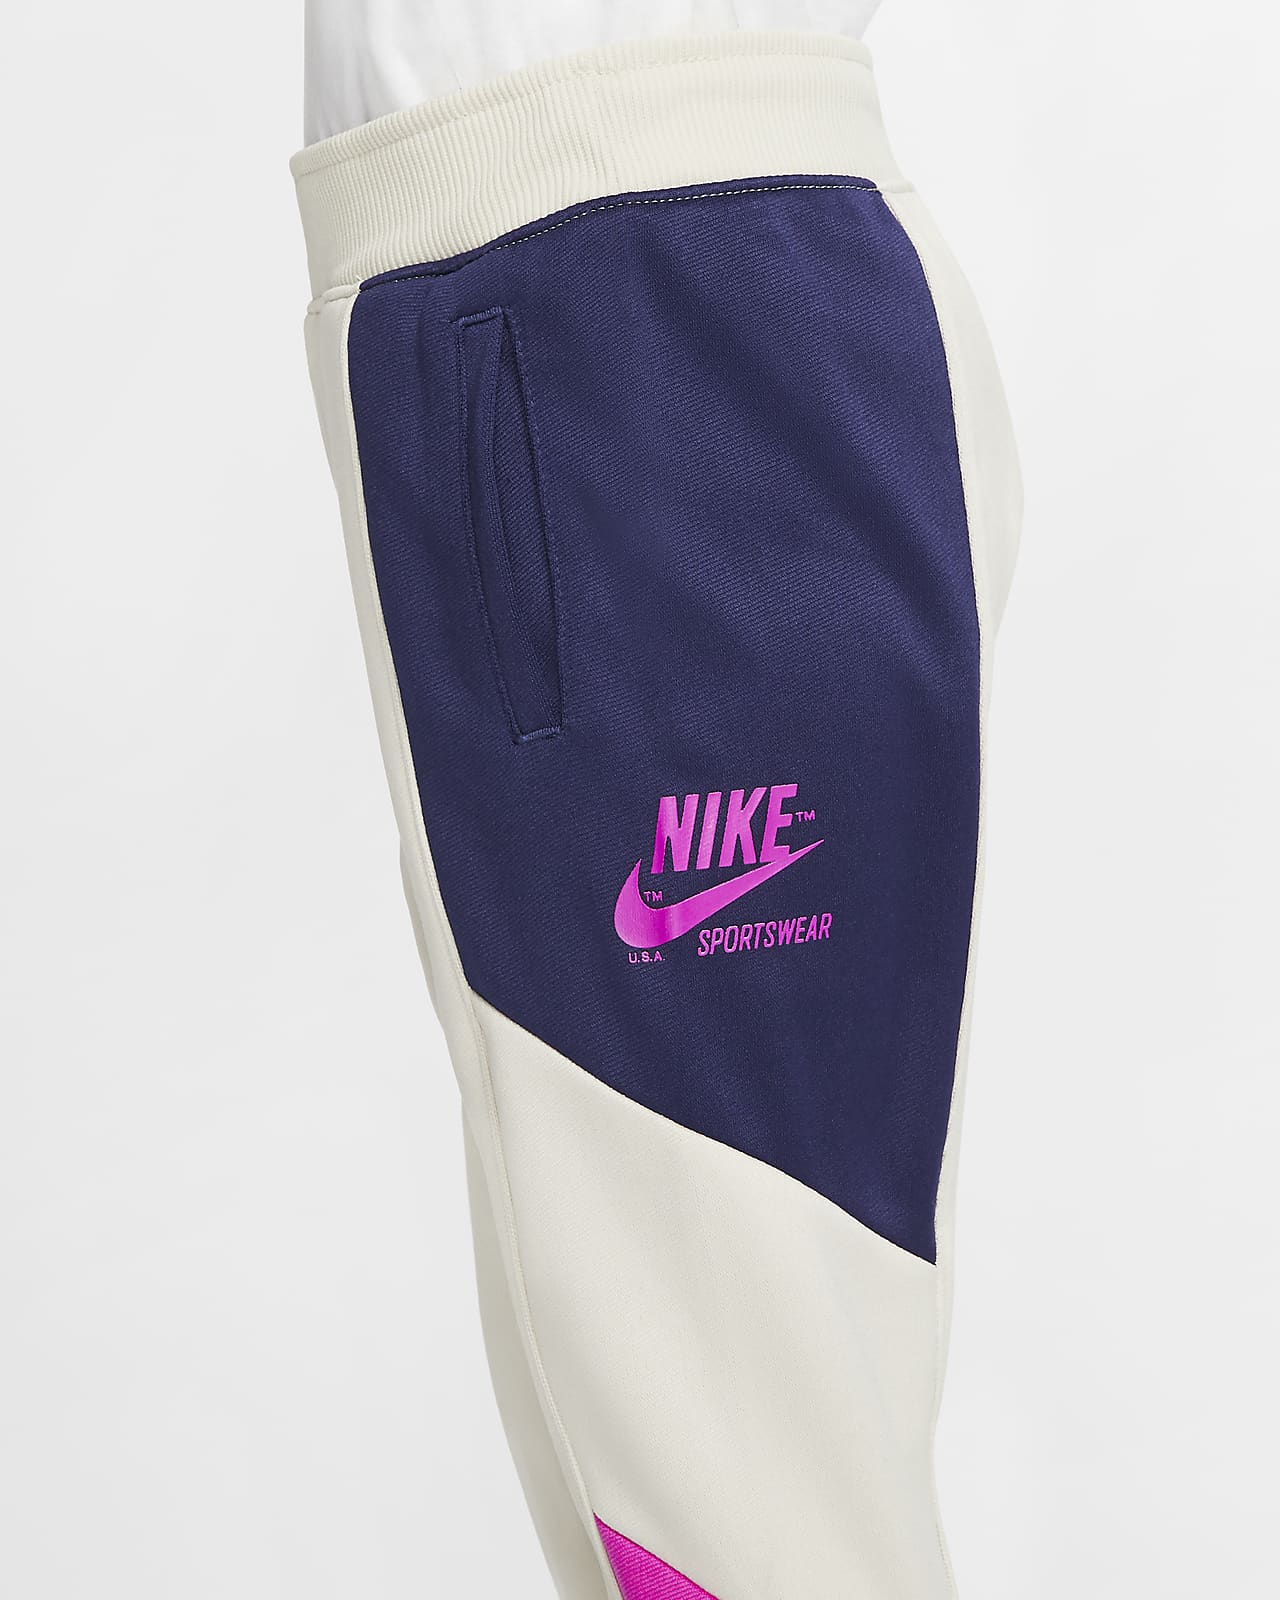 Sportswear Cuffed Nike Toddler Pants.